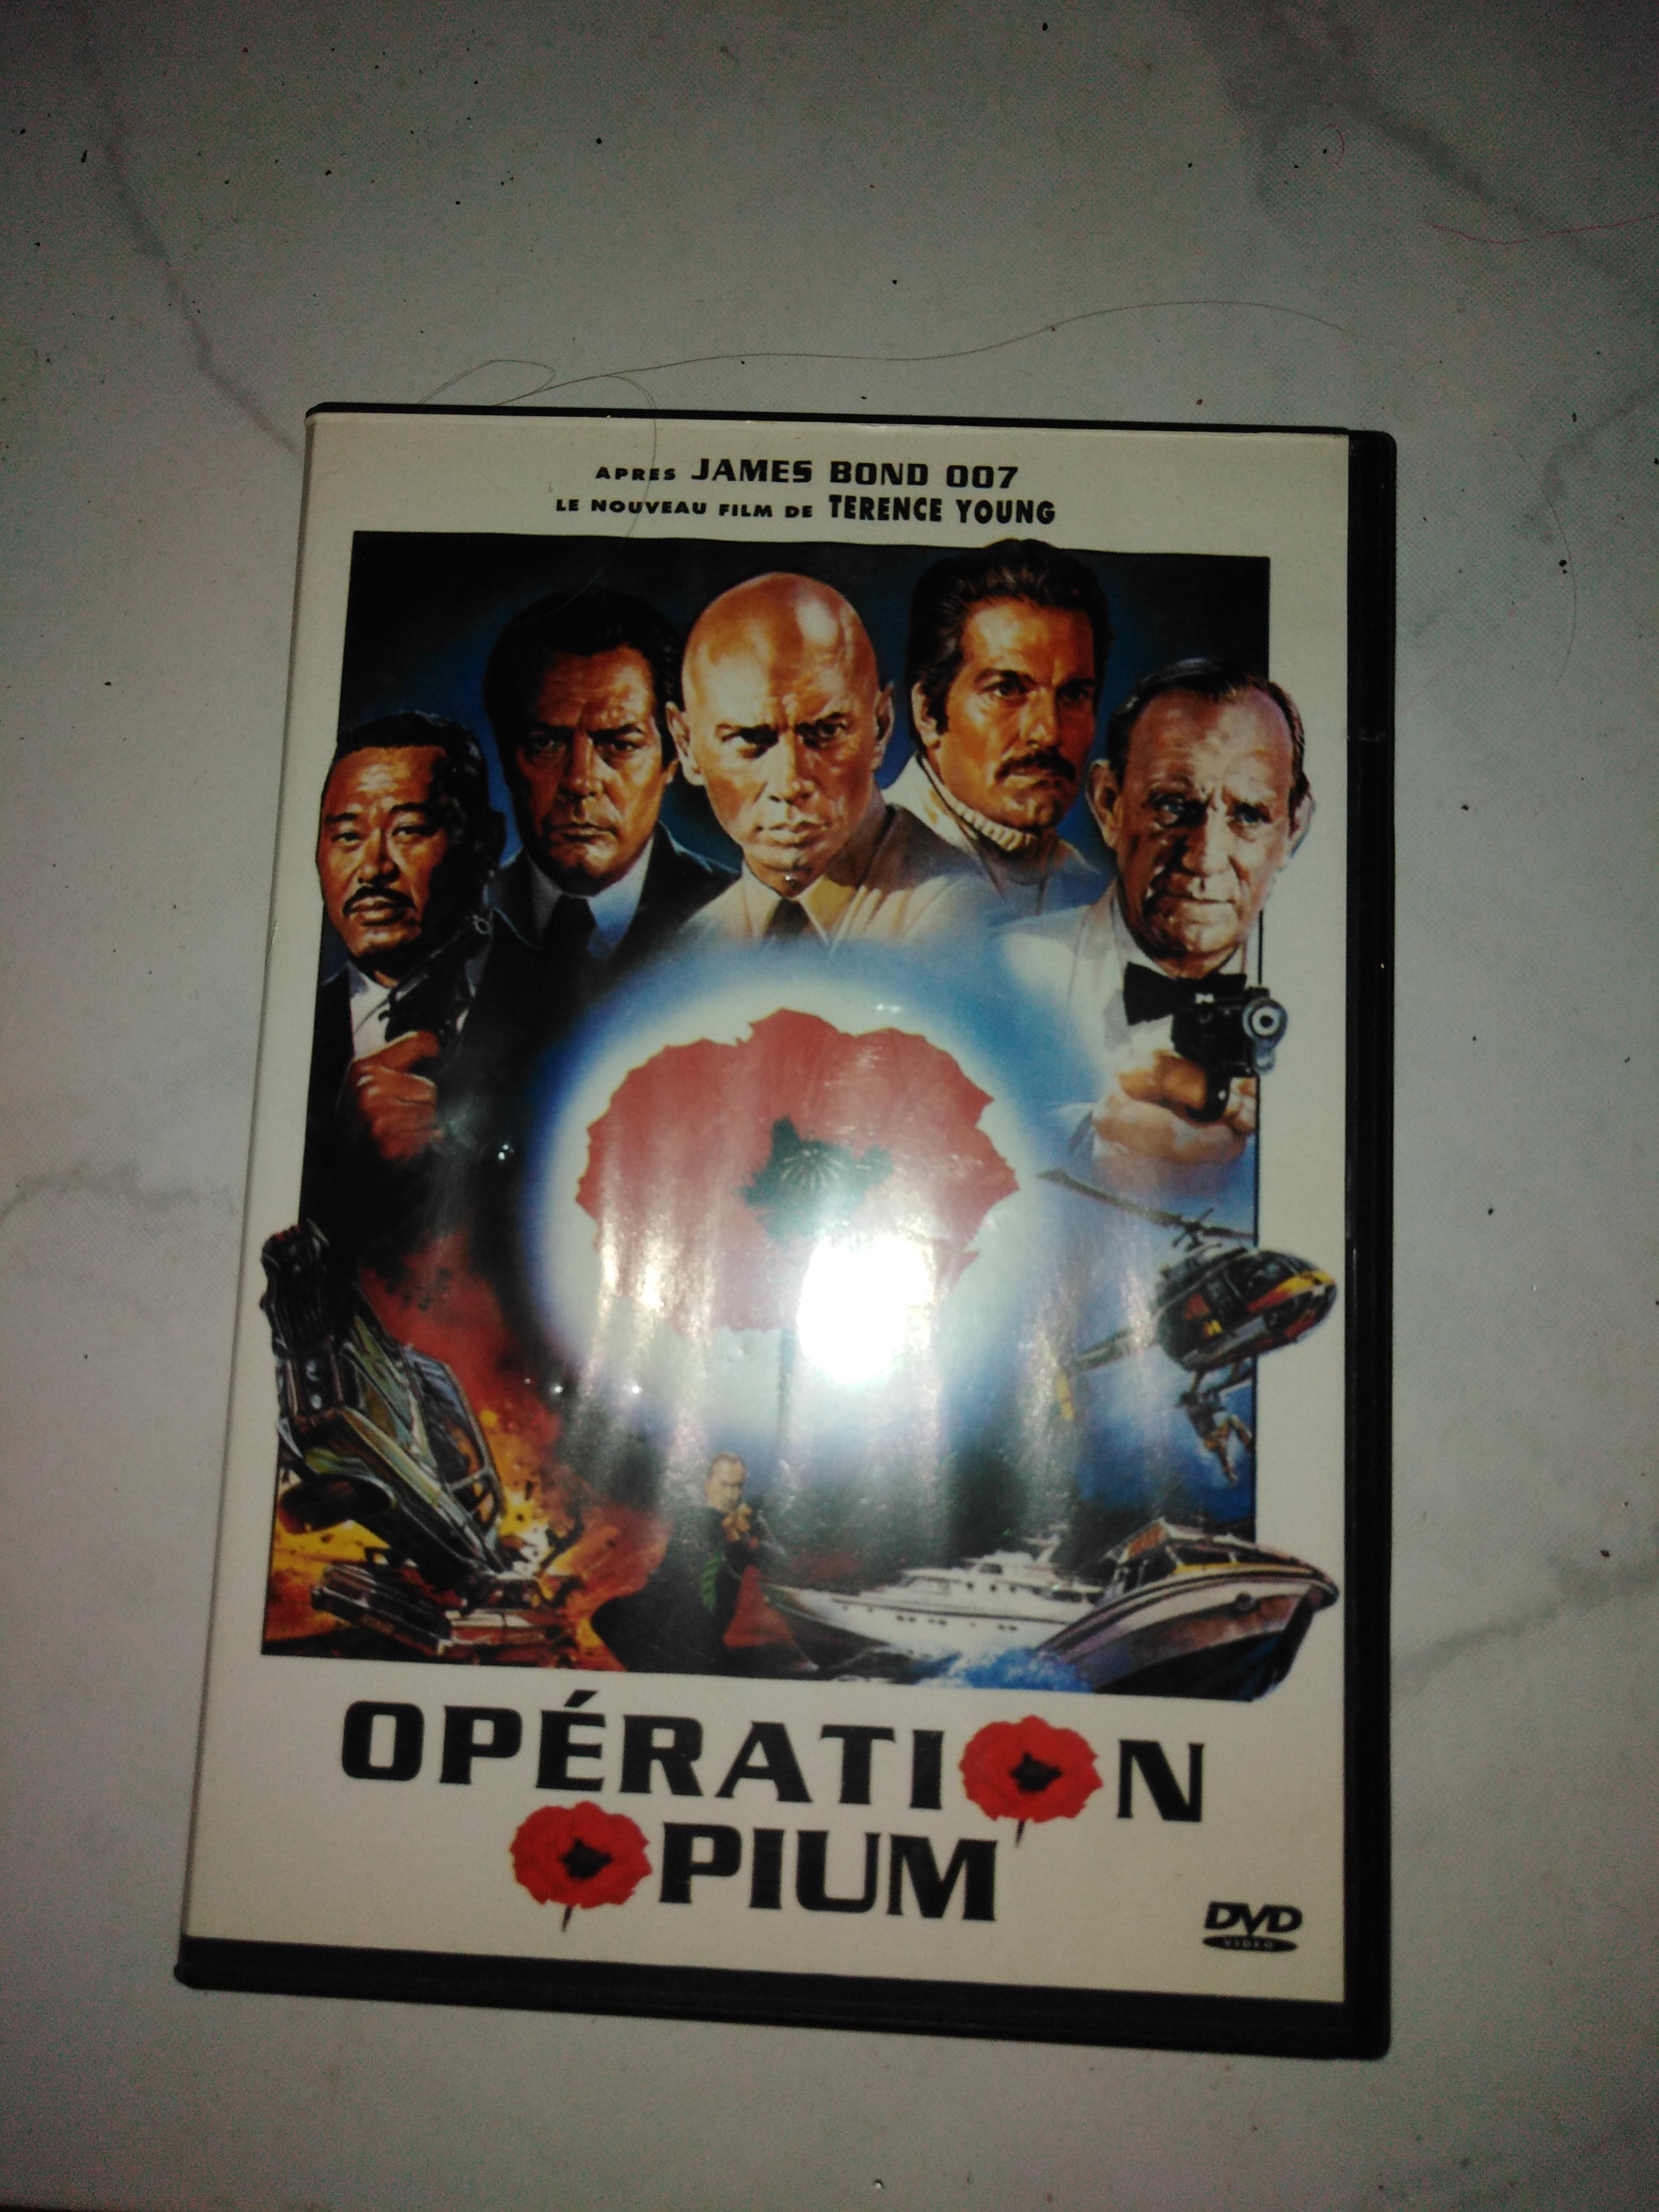 troc de troc dvd operation opium image 0